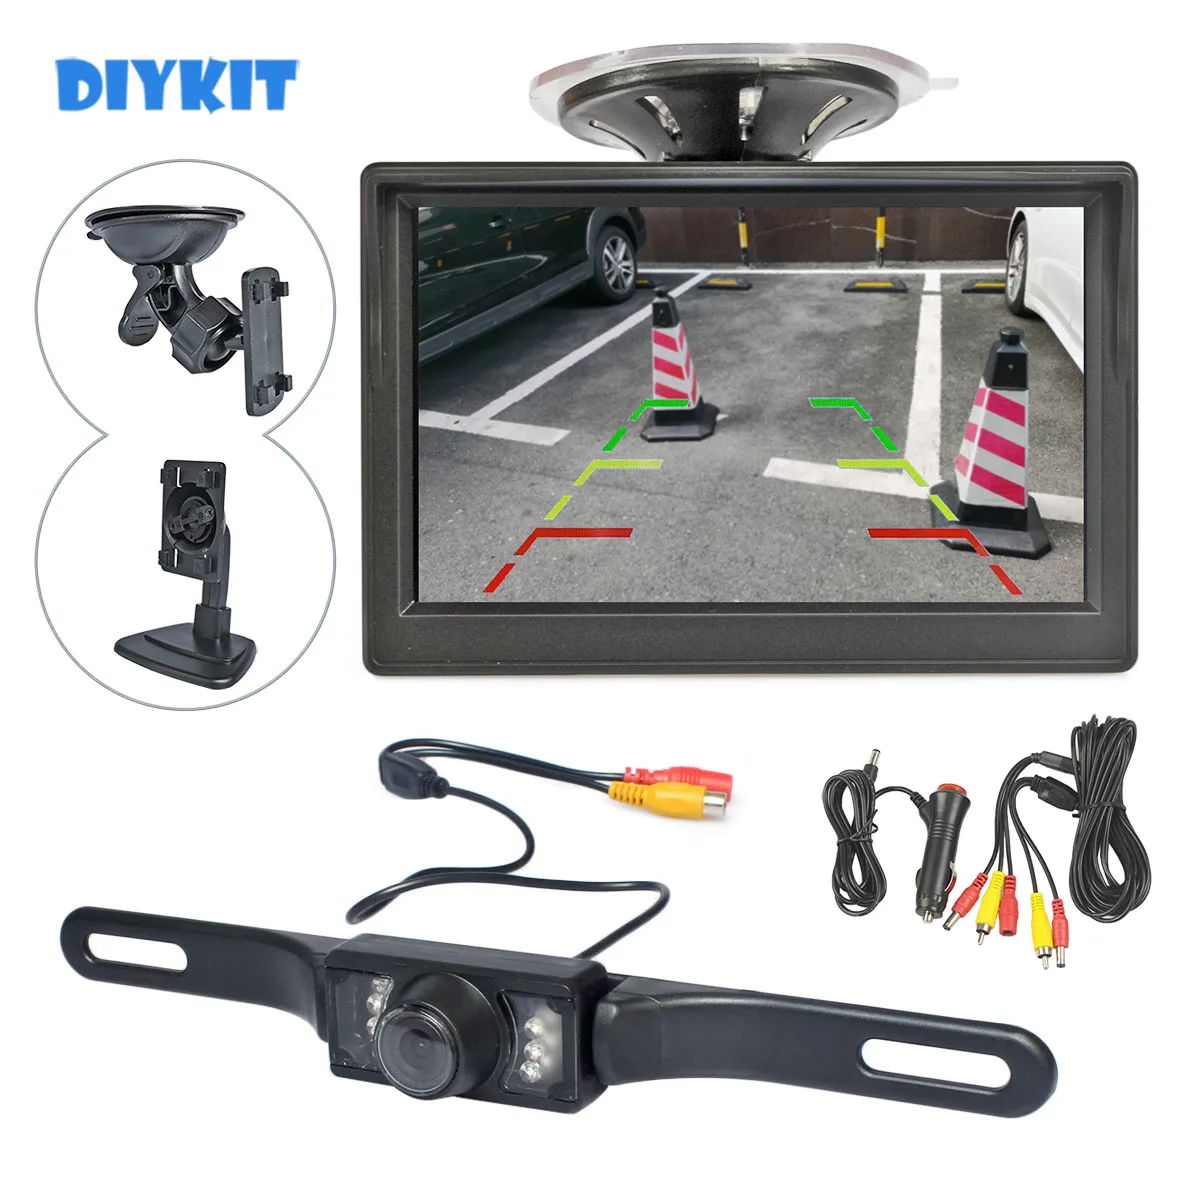 

DIYKIT 5" Backup Car Monitor Car Van Truck Parking IR Night Vision Reversing Camera Rear View Security System